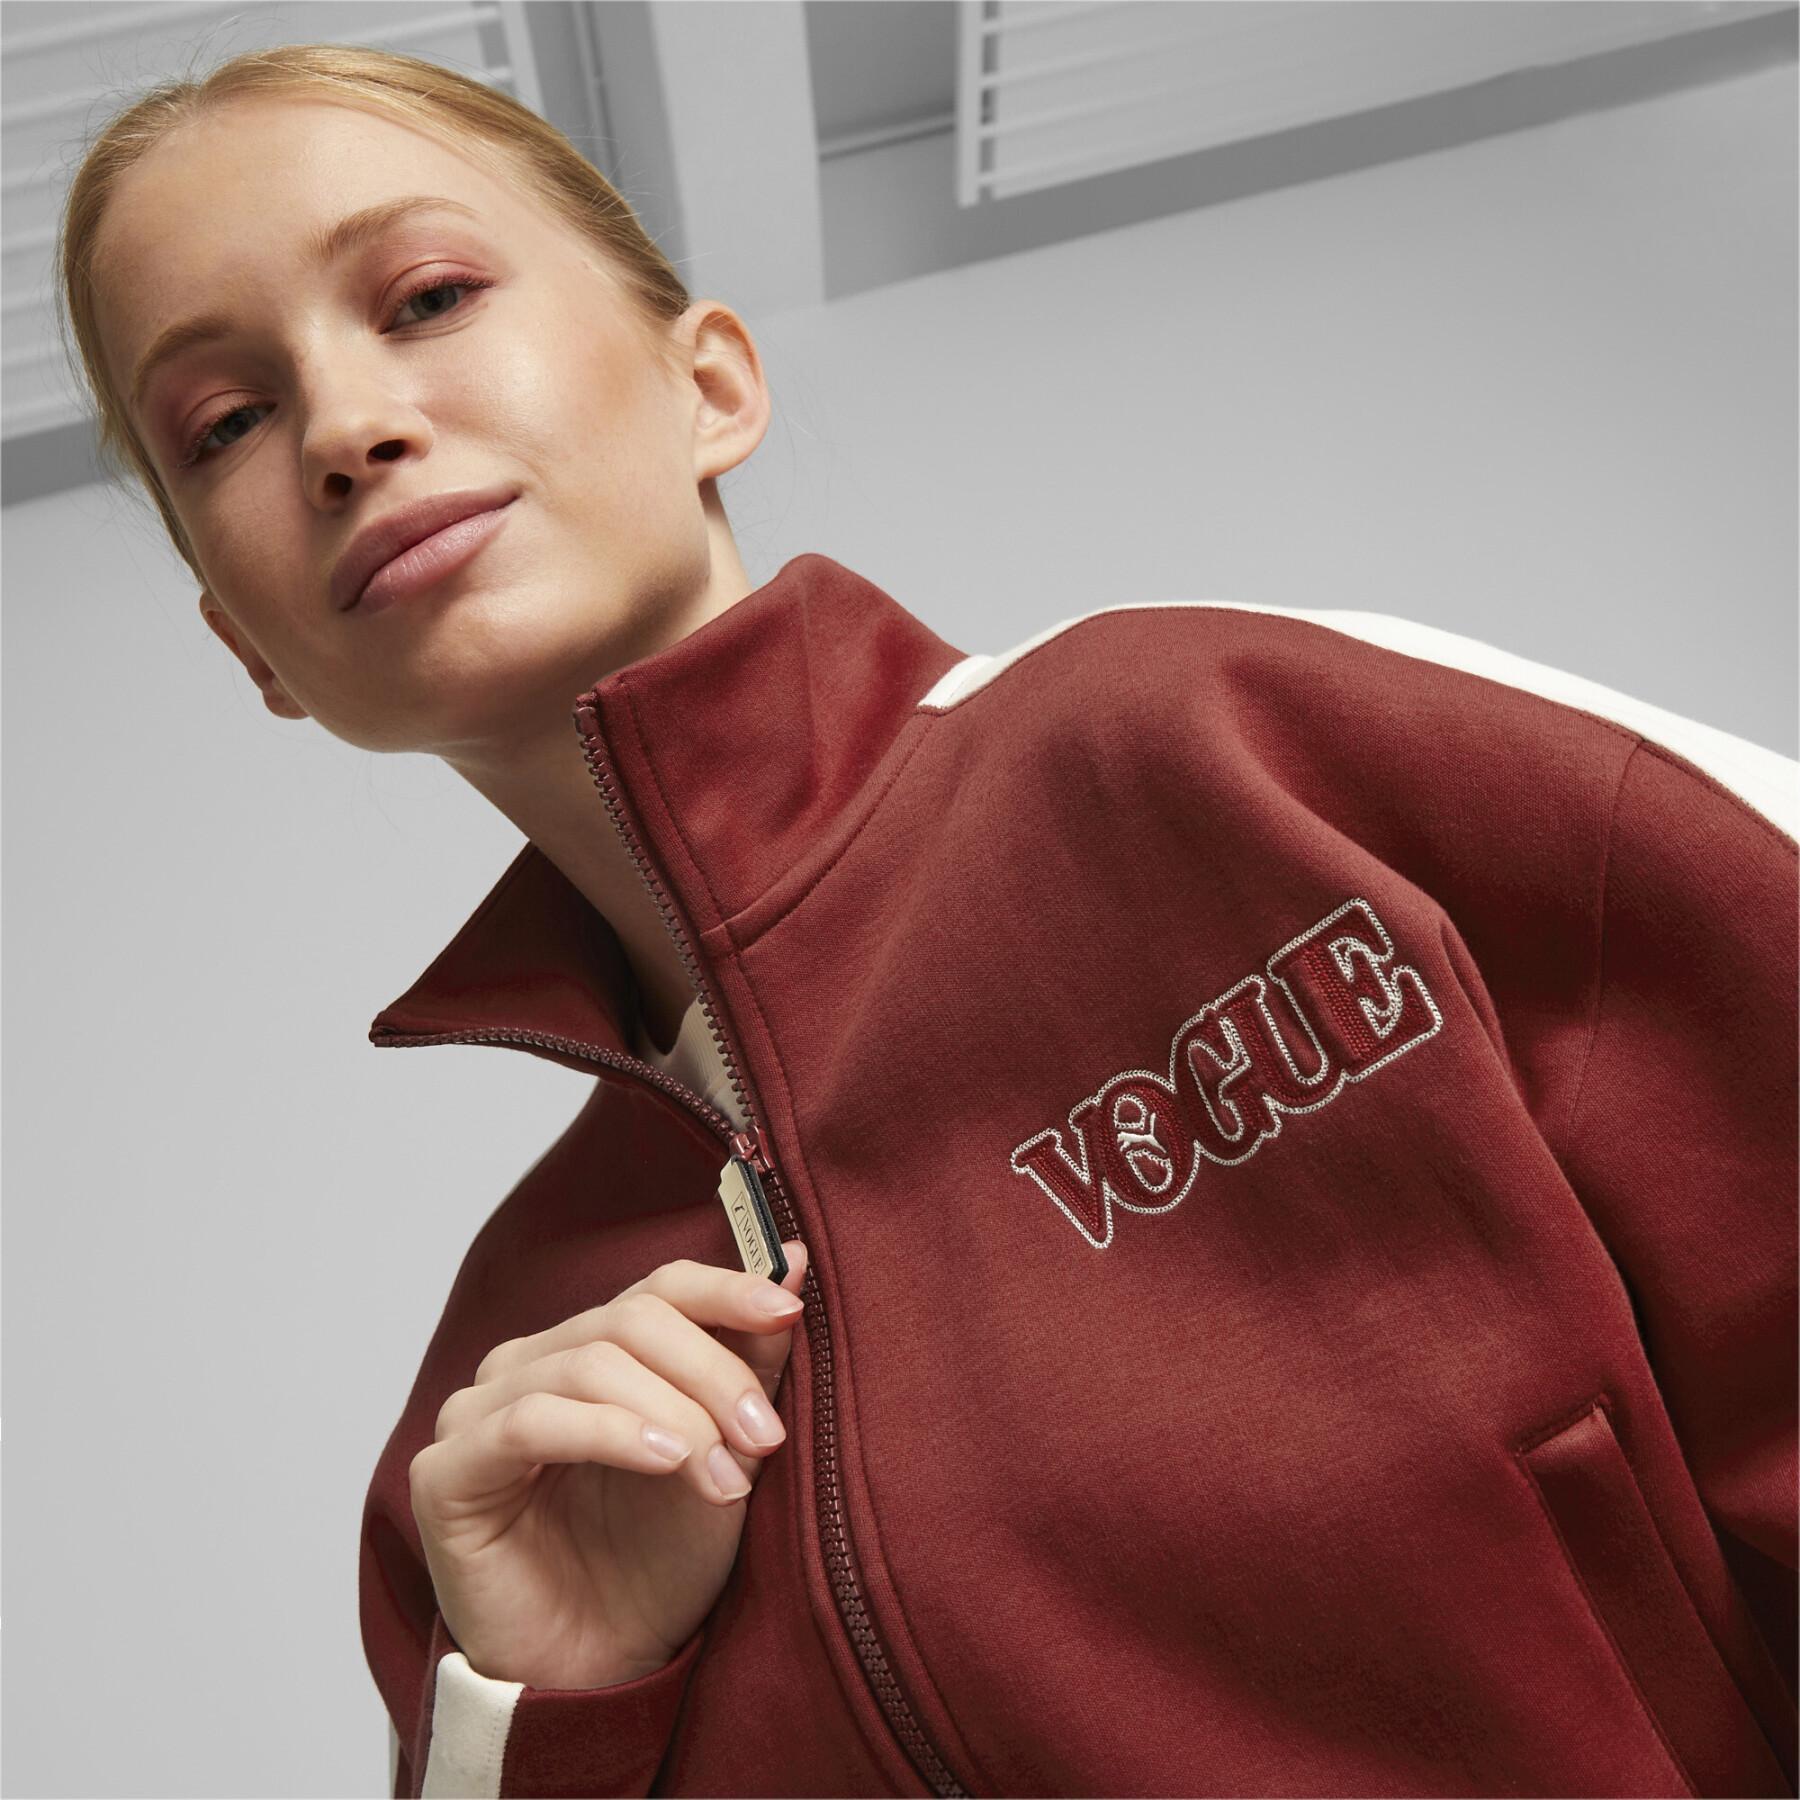 Women's sweat jacket Puma X Vogue T7 Dk